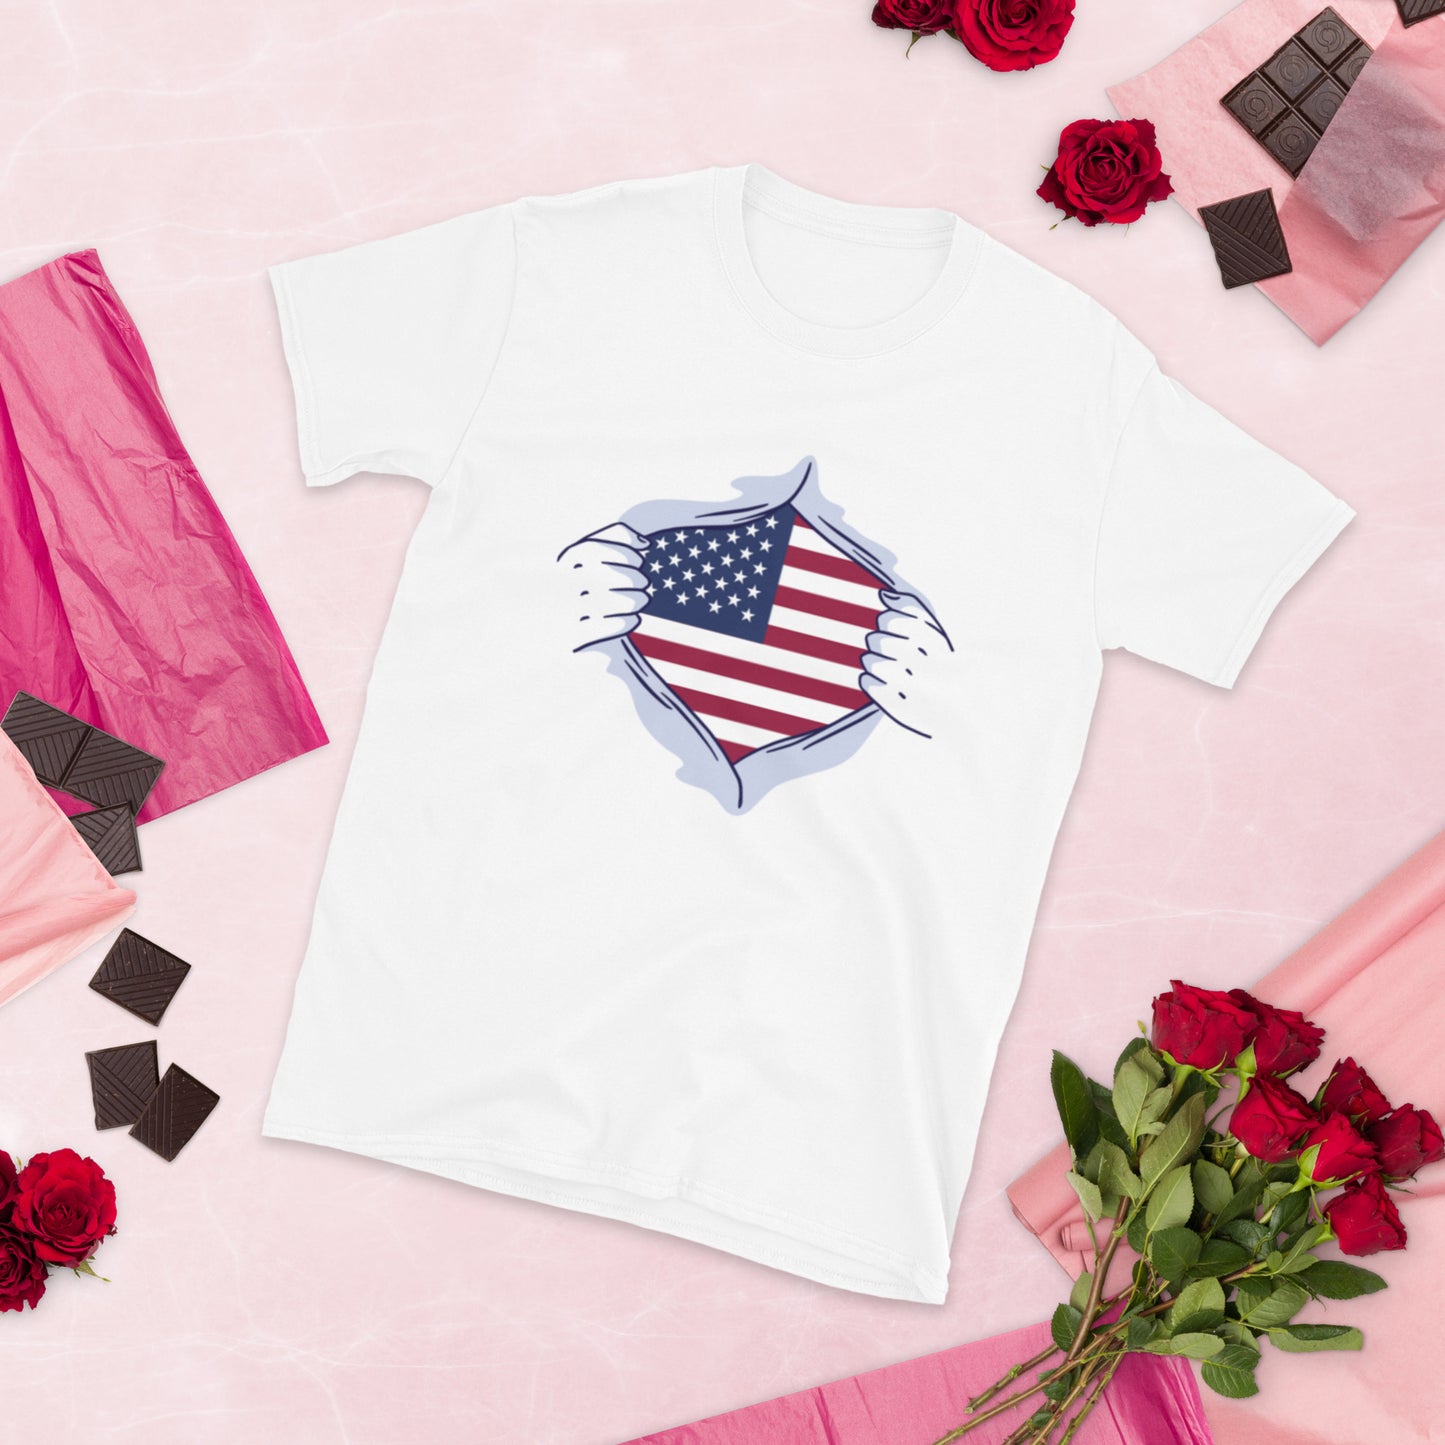 America First Shirt / Save America Shirt / 4th July Day T-Shirt